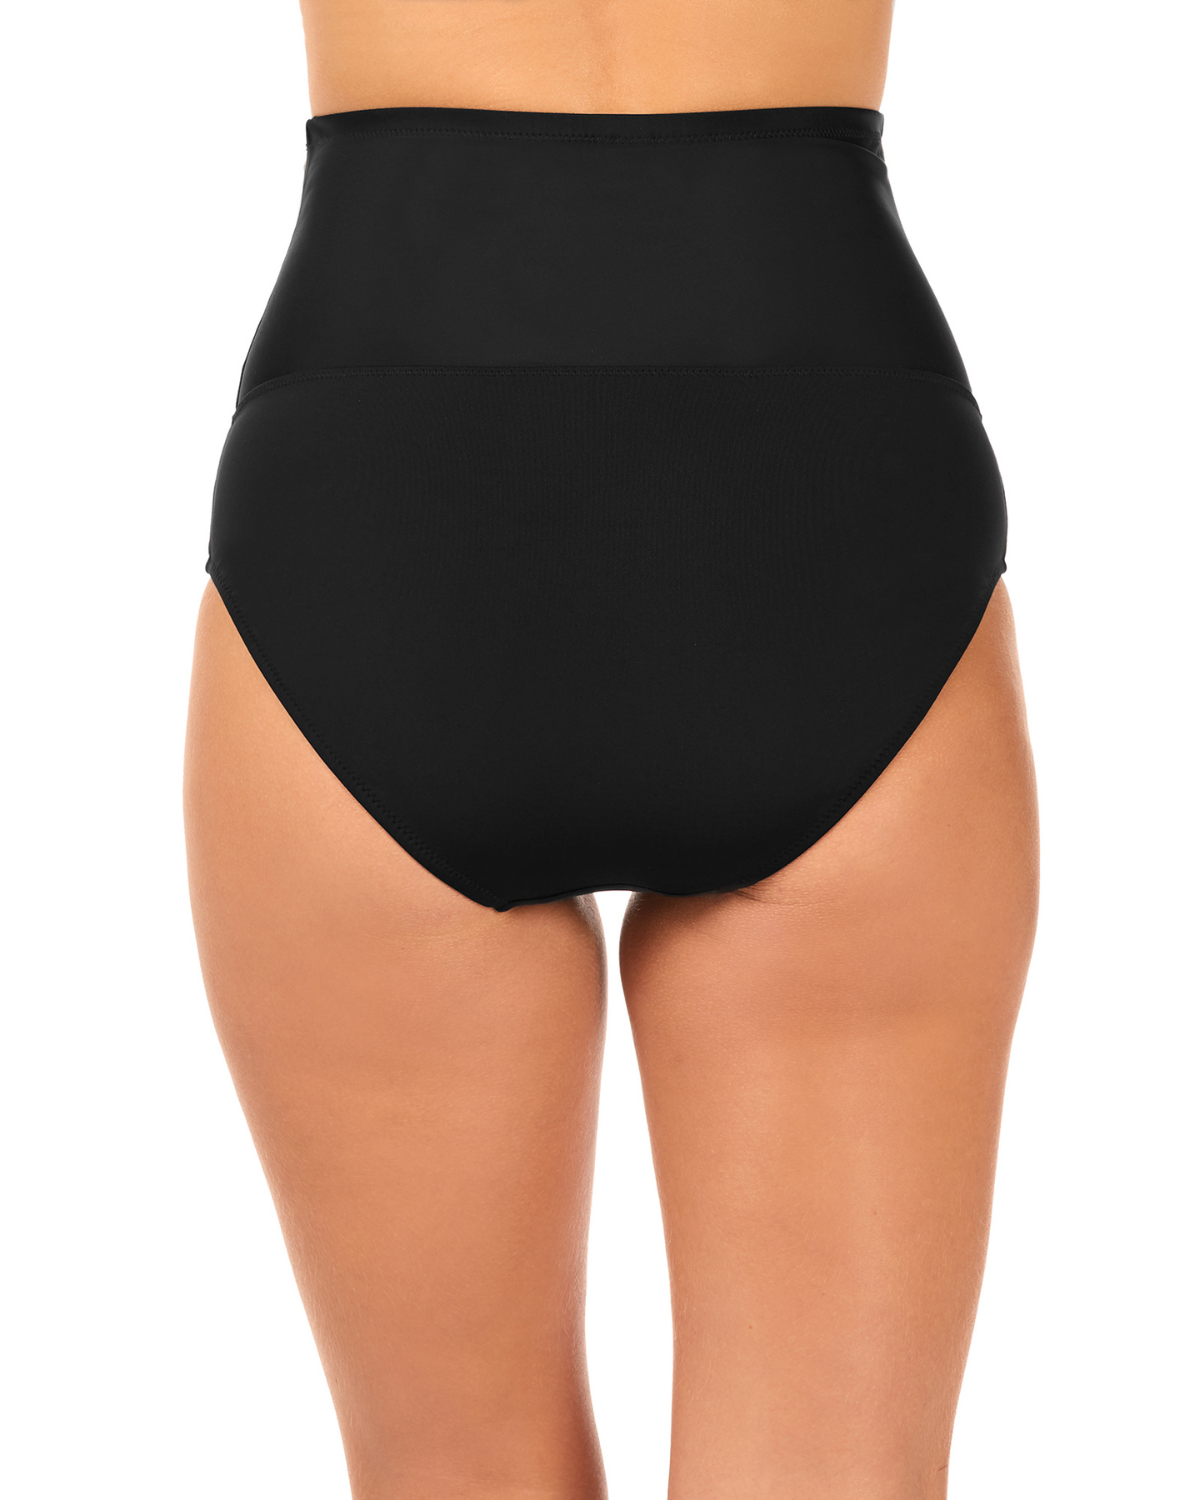 Model wearing a high waist control brief bottom in black